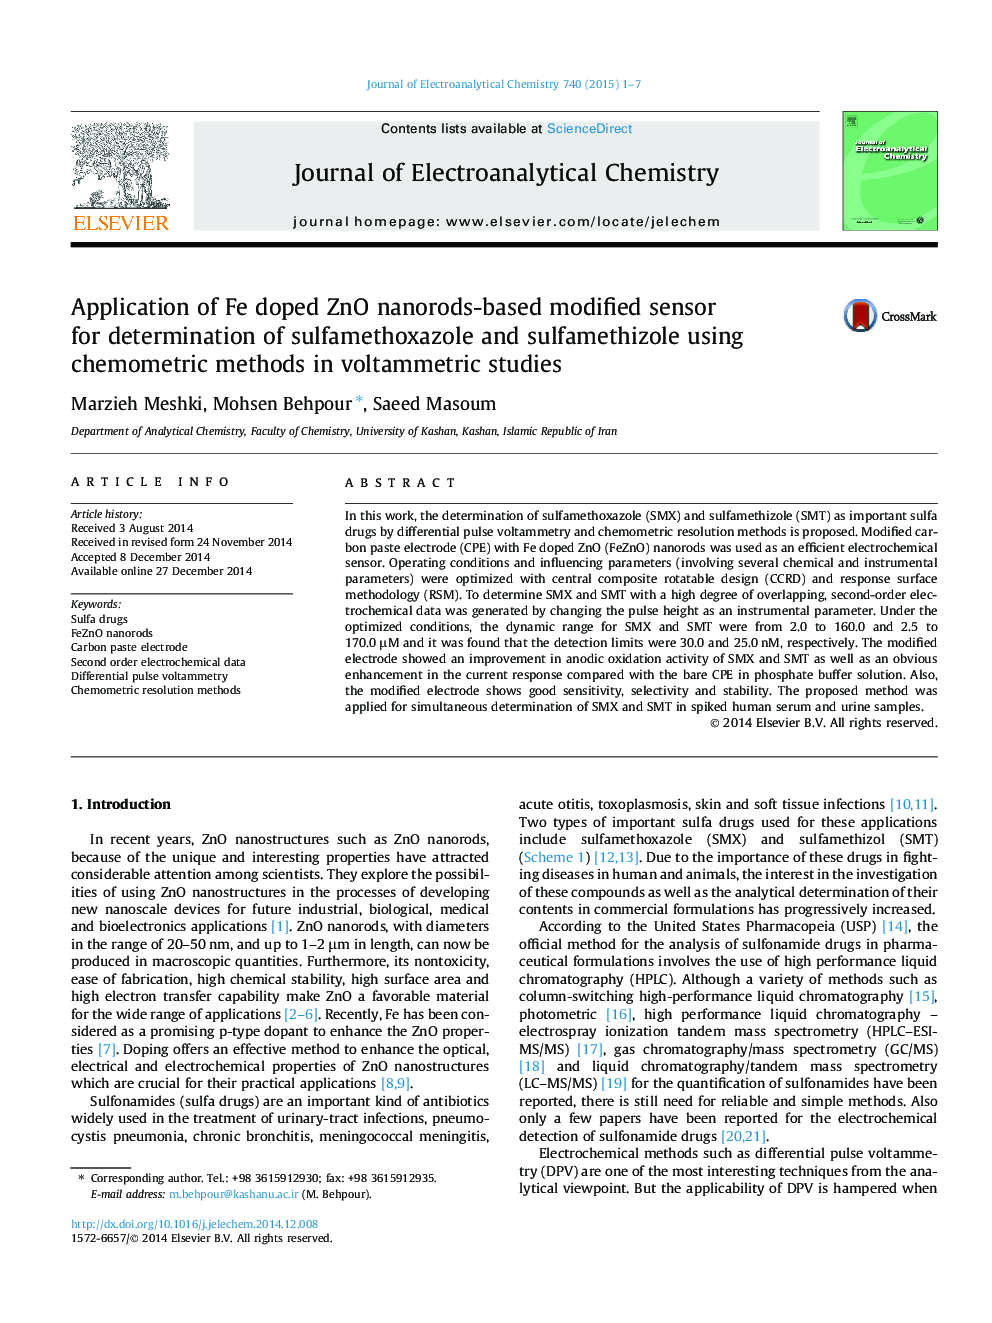 Application of Fe doped ZnO nanorods-based modified sensor for determination of sulfamethoxazole and sulfamethizole using chemometric methods in voltammetric studies